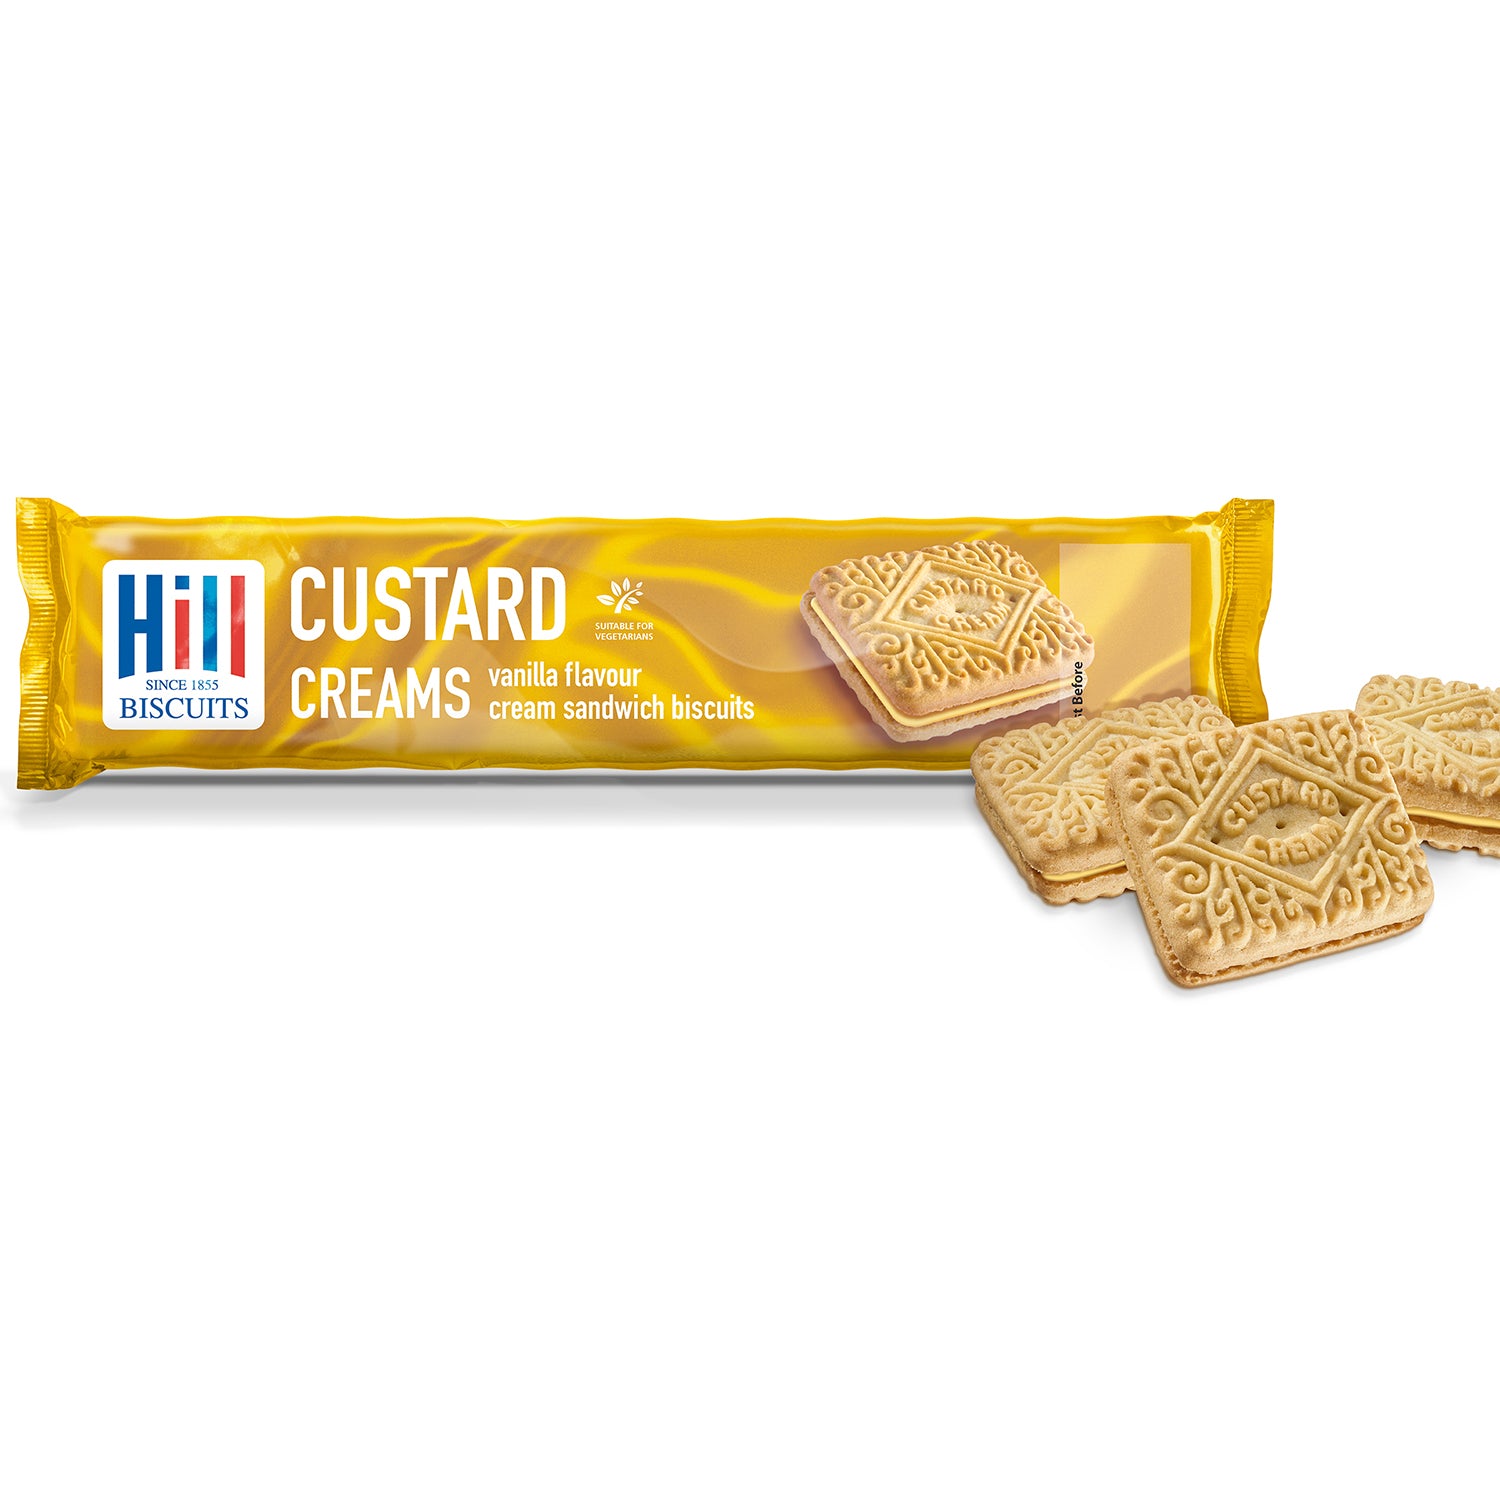 Hill Custard Creams 150g